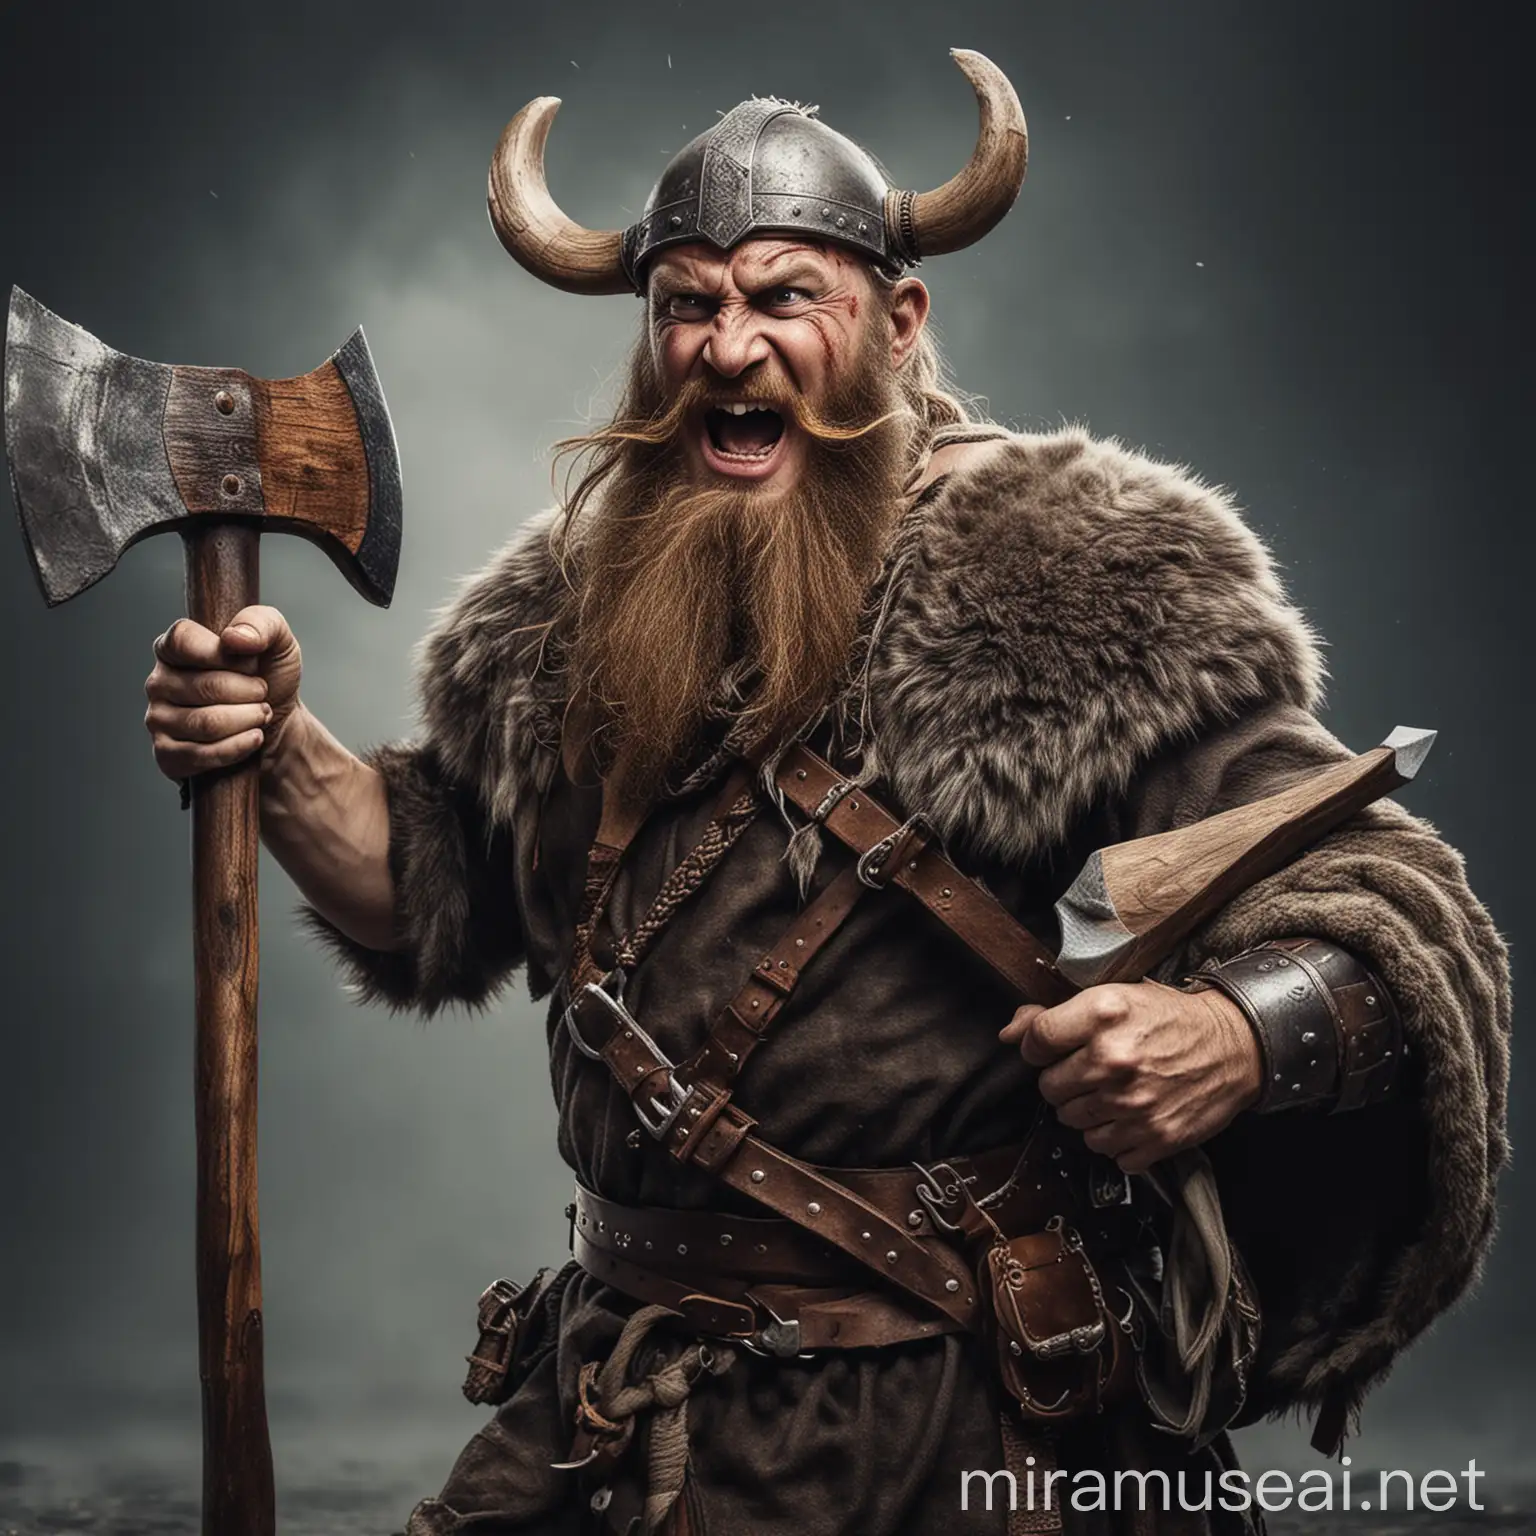 Intoxicated Viking Warrior Brandishing Axe